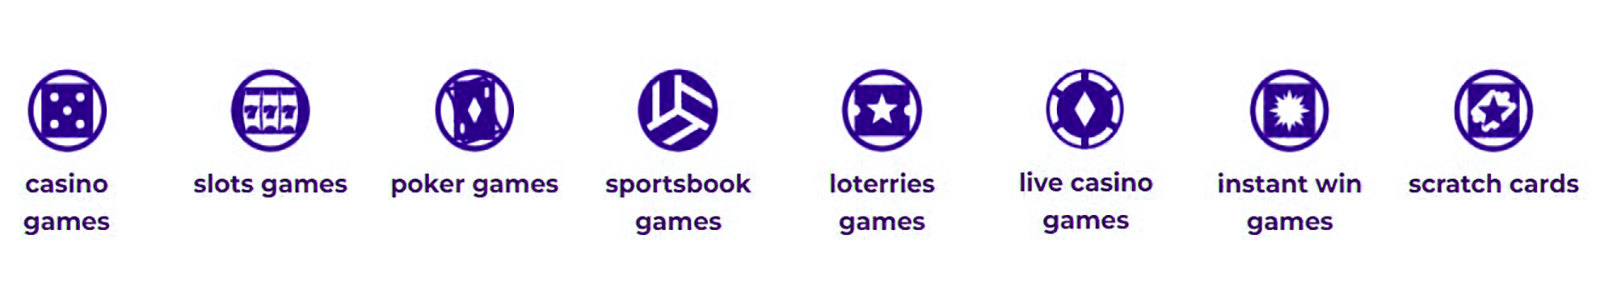 Online Casino Game Categories